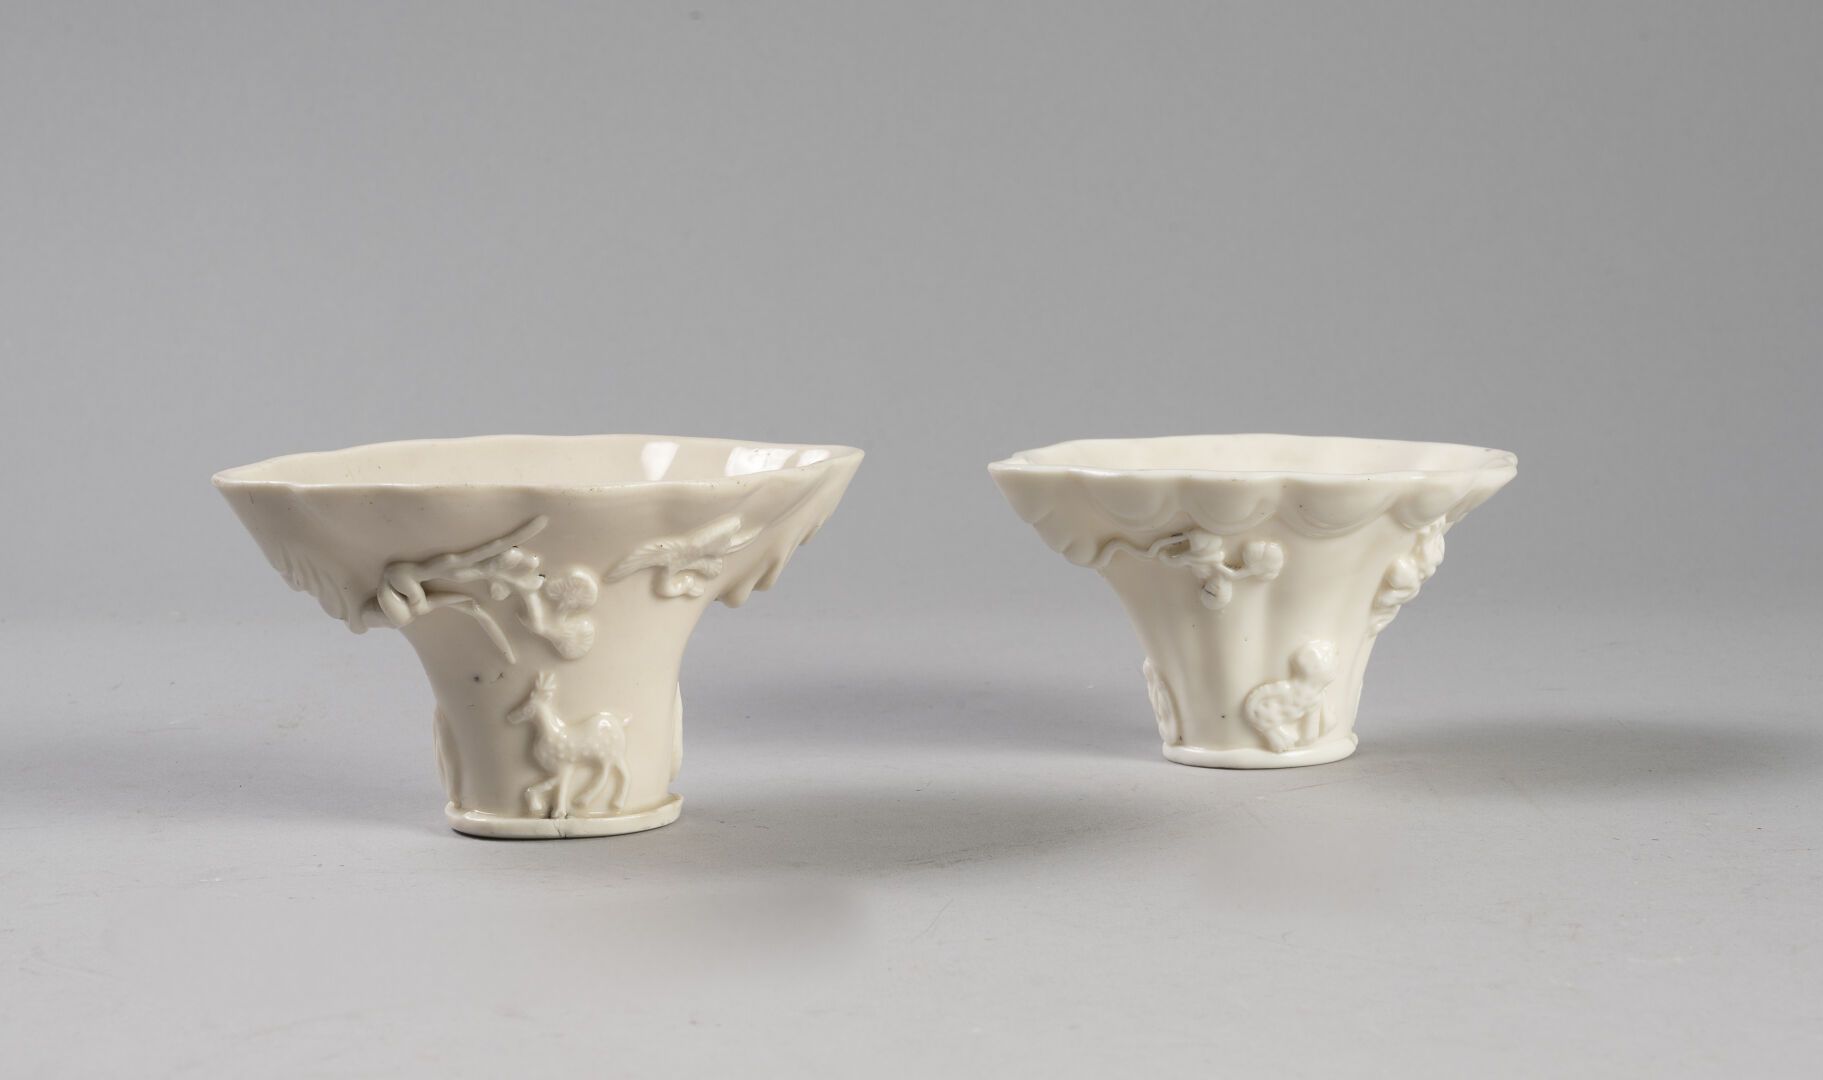 Null 中国

两个酒杯

中国白瓷，饰有龙、鹿和花的图案

康熙时期，18世纪

高度为7和8厘米

(烧制过程中出现一些小裂纹，其中一个的底部有一个缺口)